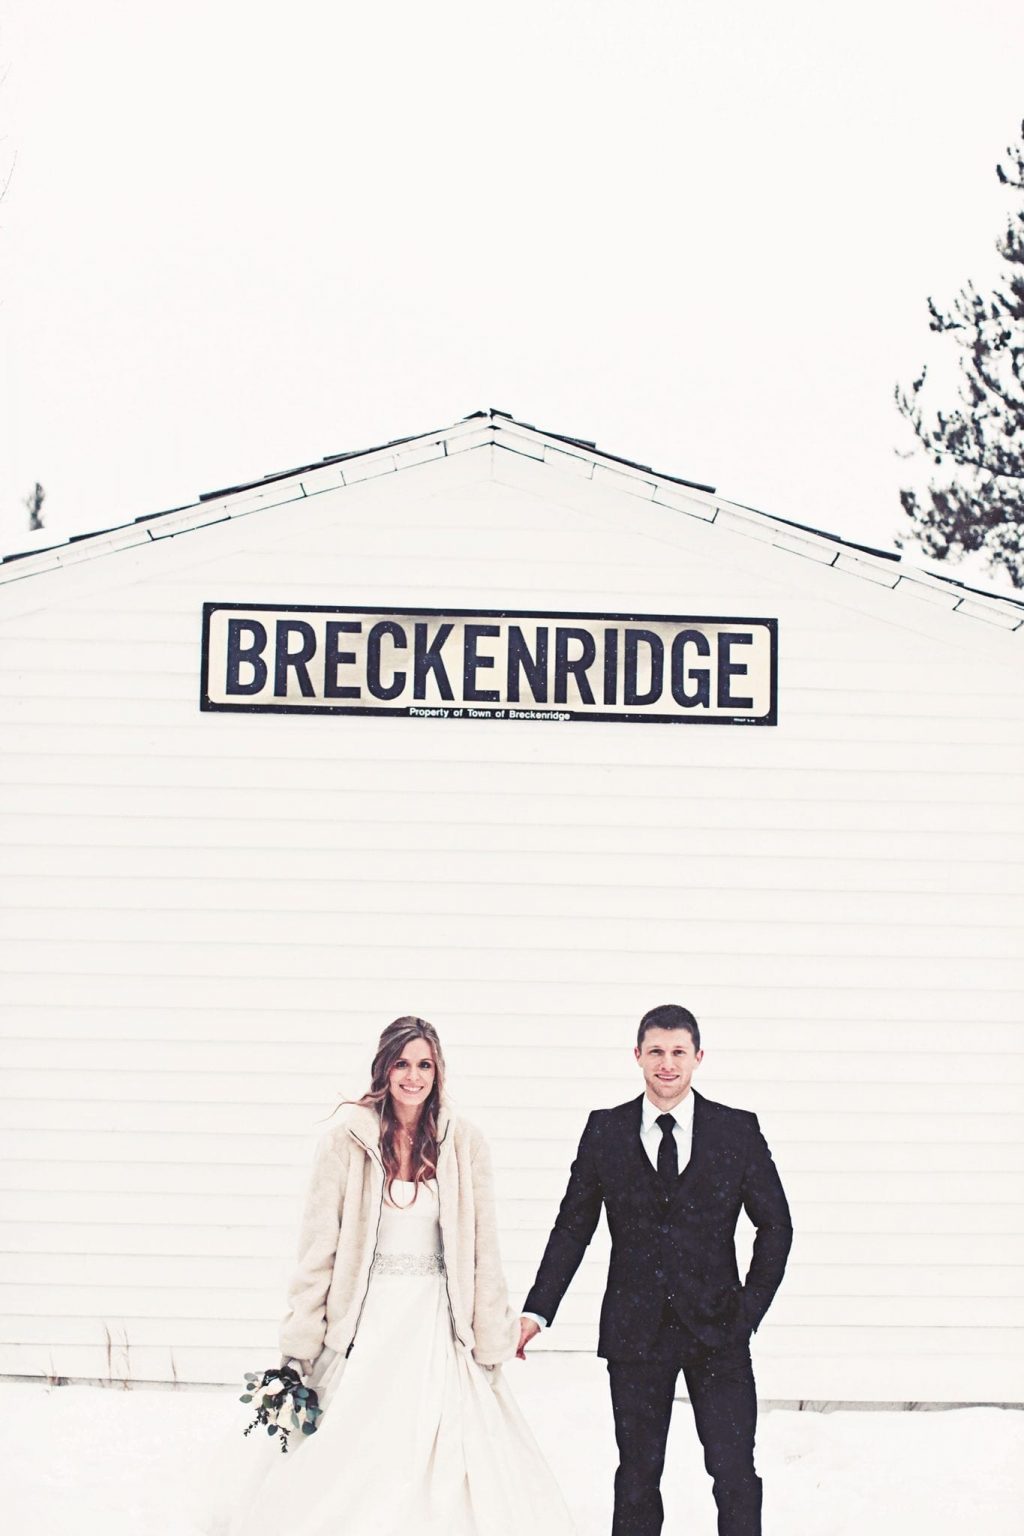 Winter wedding photograph in Breckenridge